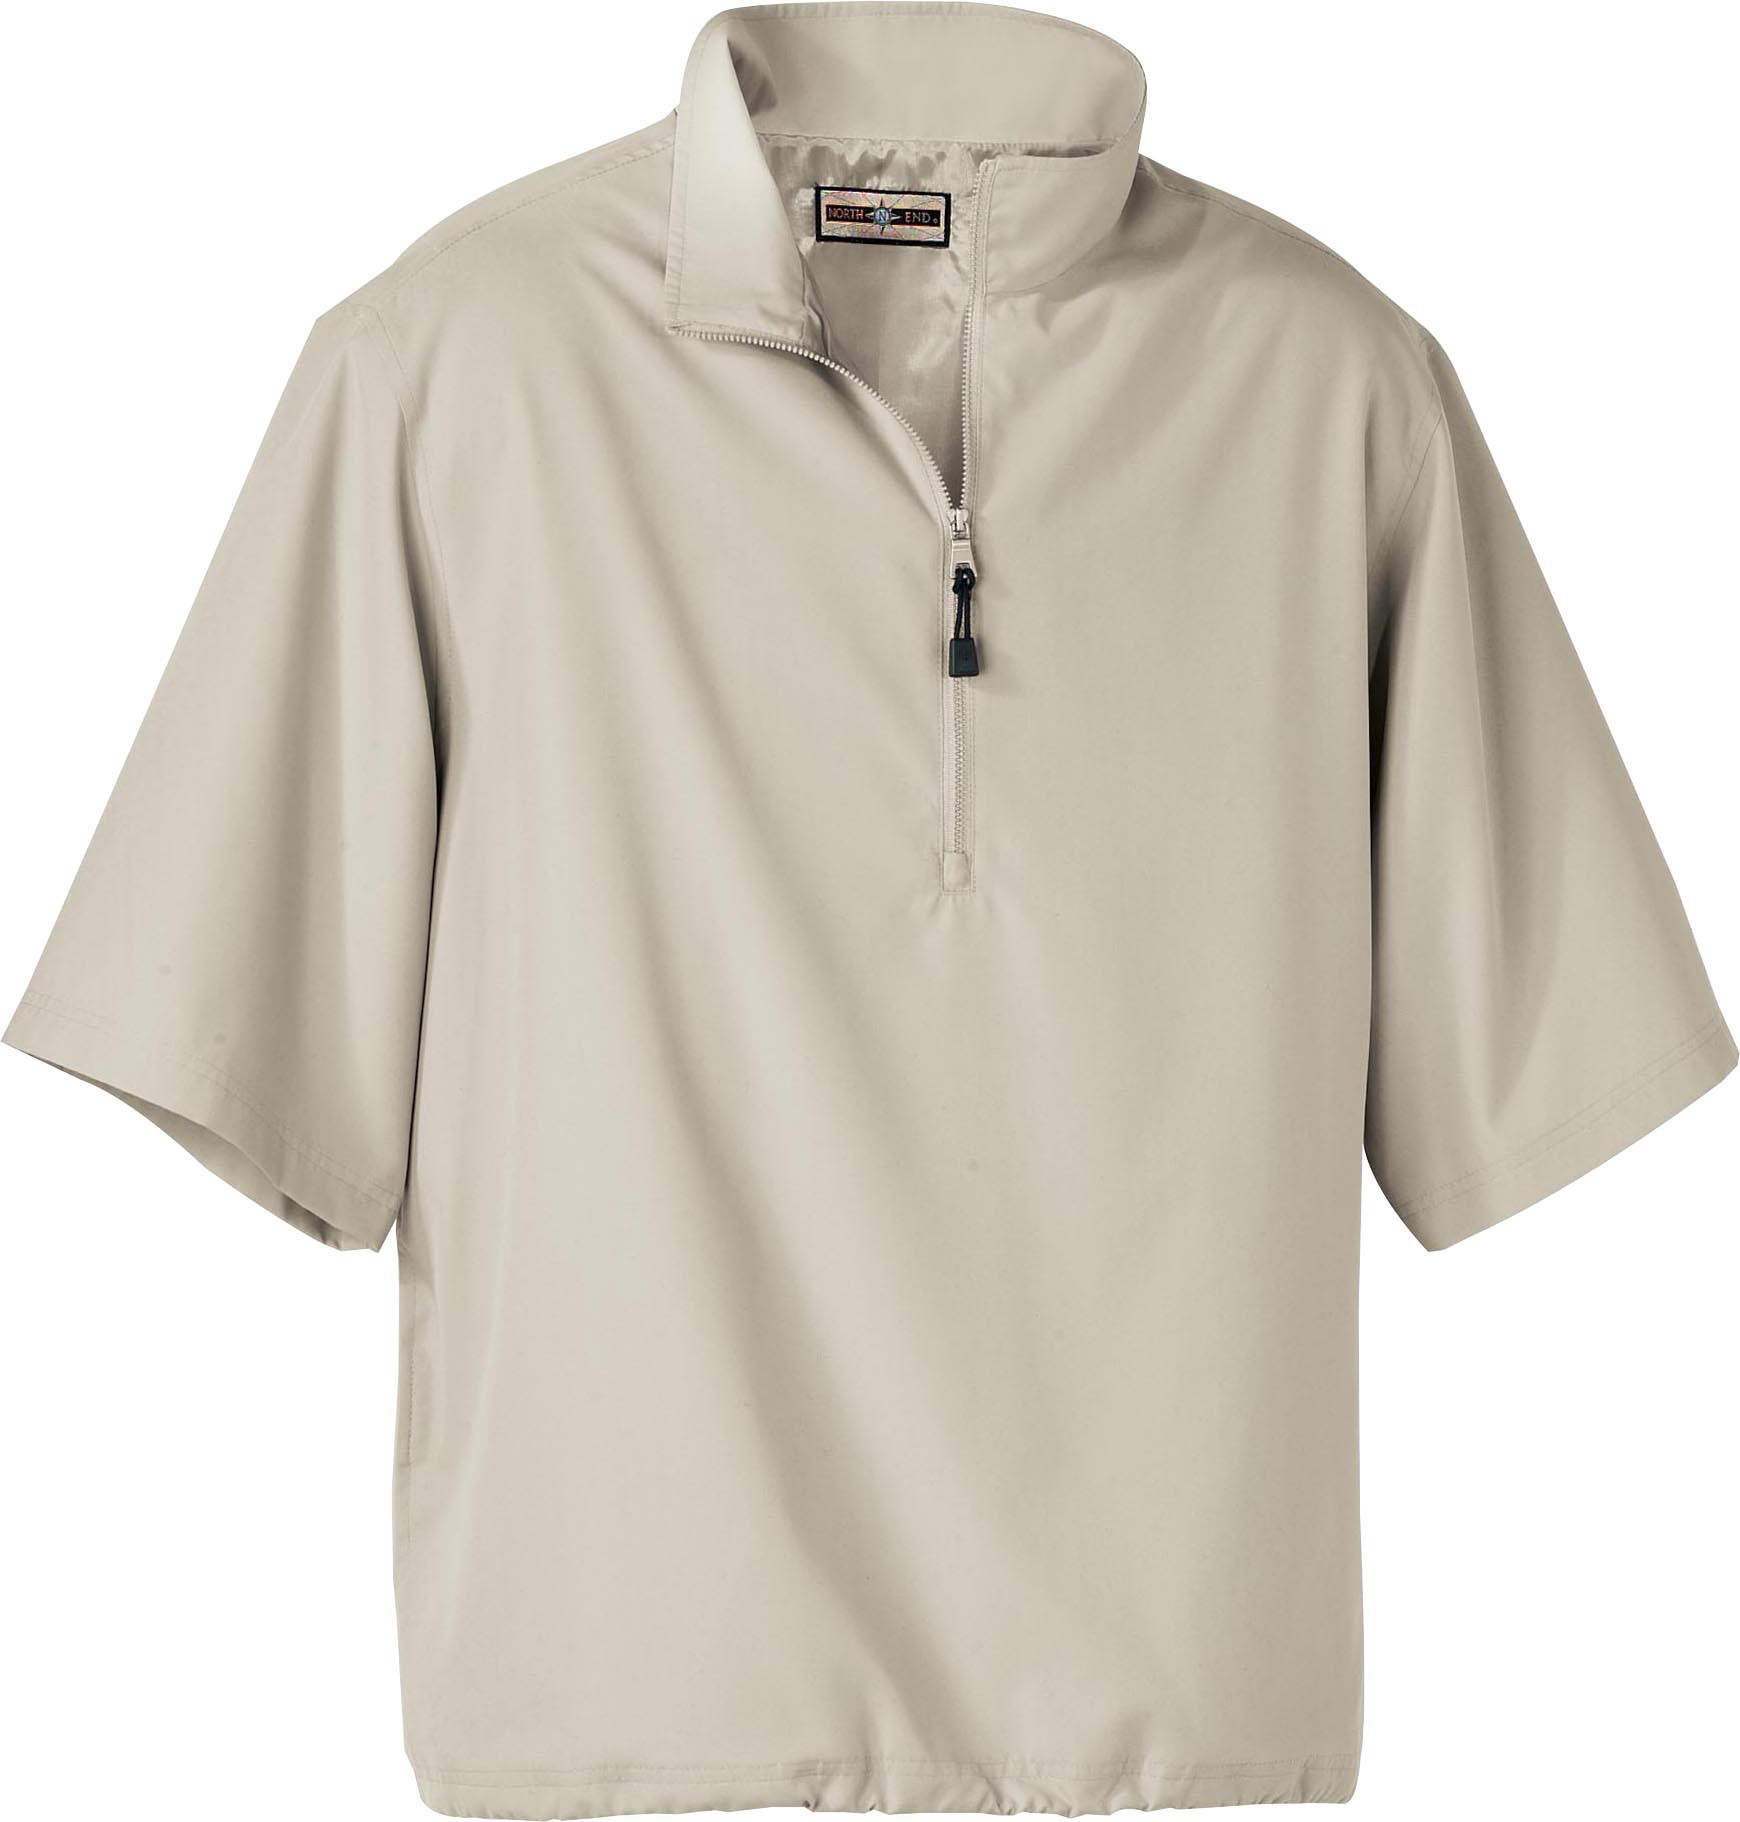 Ash City Windshirts 88084 - Men's Micro Plus Short Sleeve Windshirt With Teflon